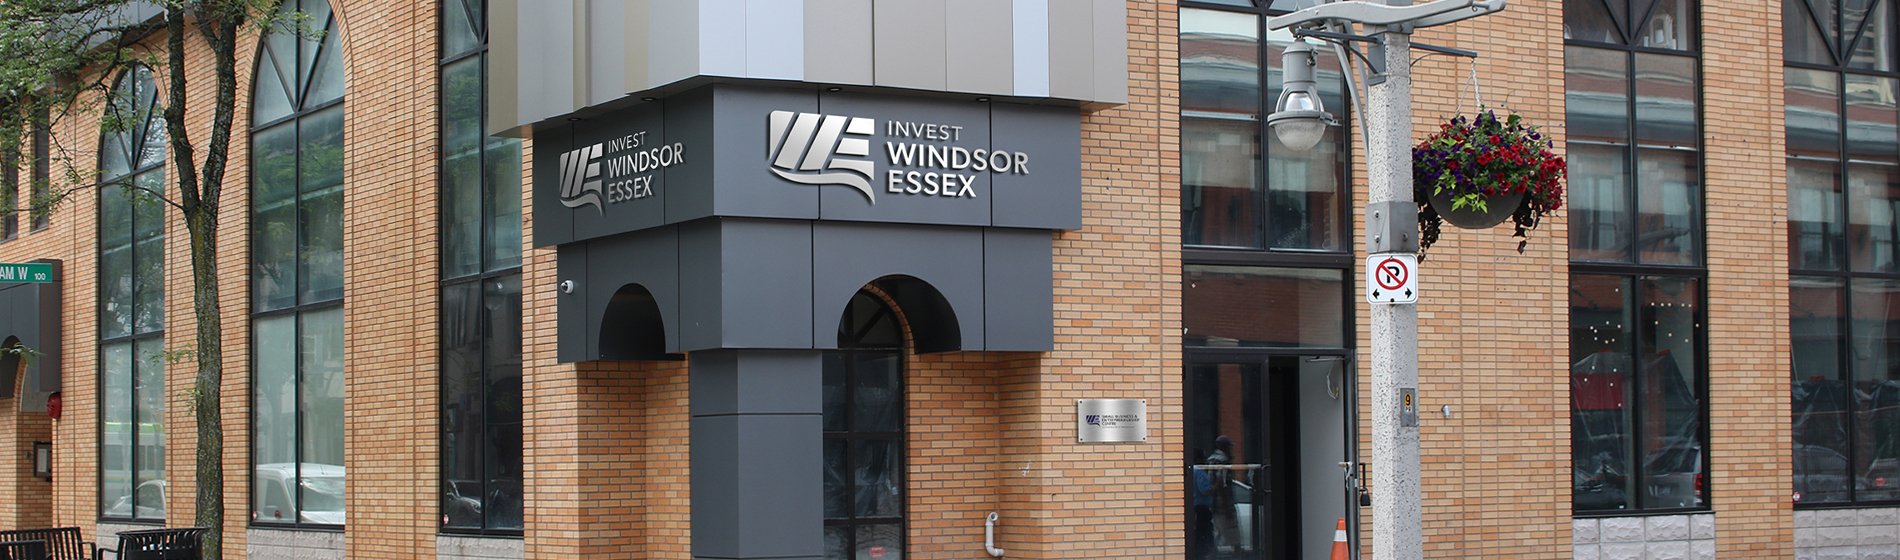 Invest WindsorEssex exterior office signage